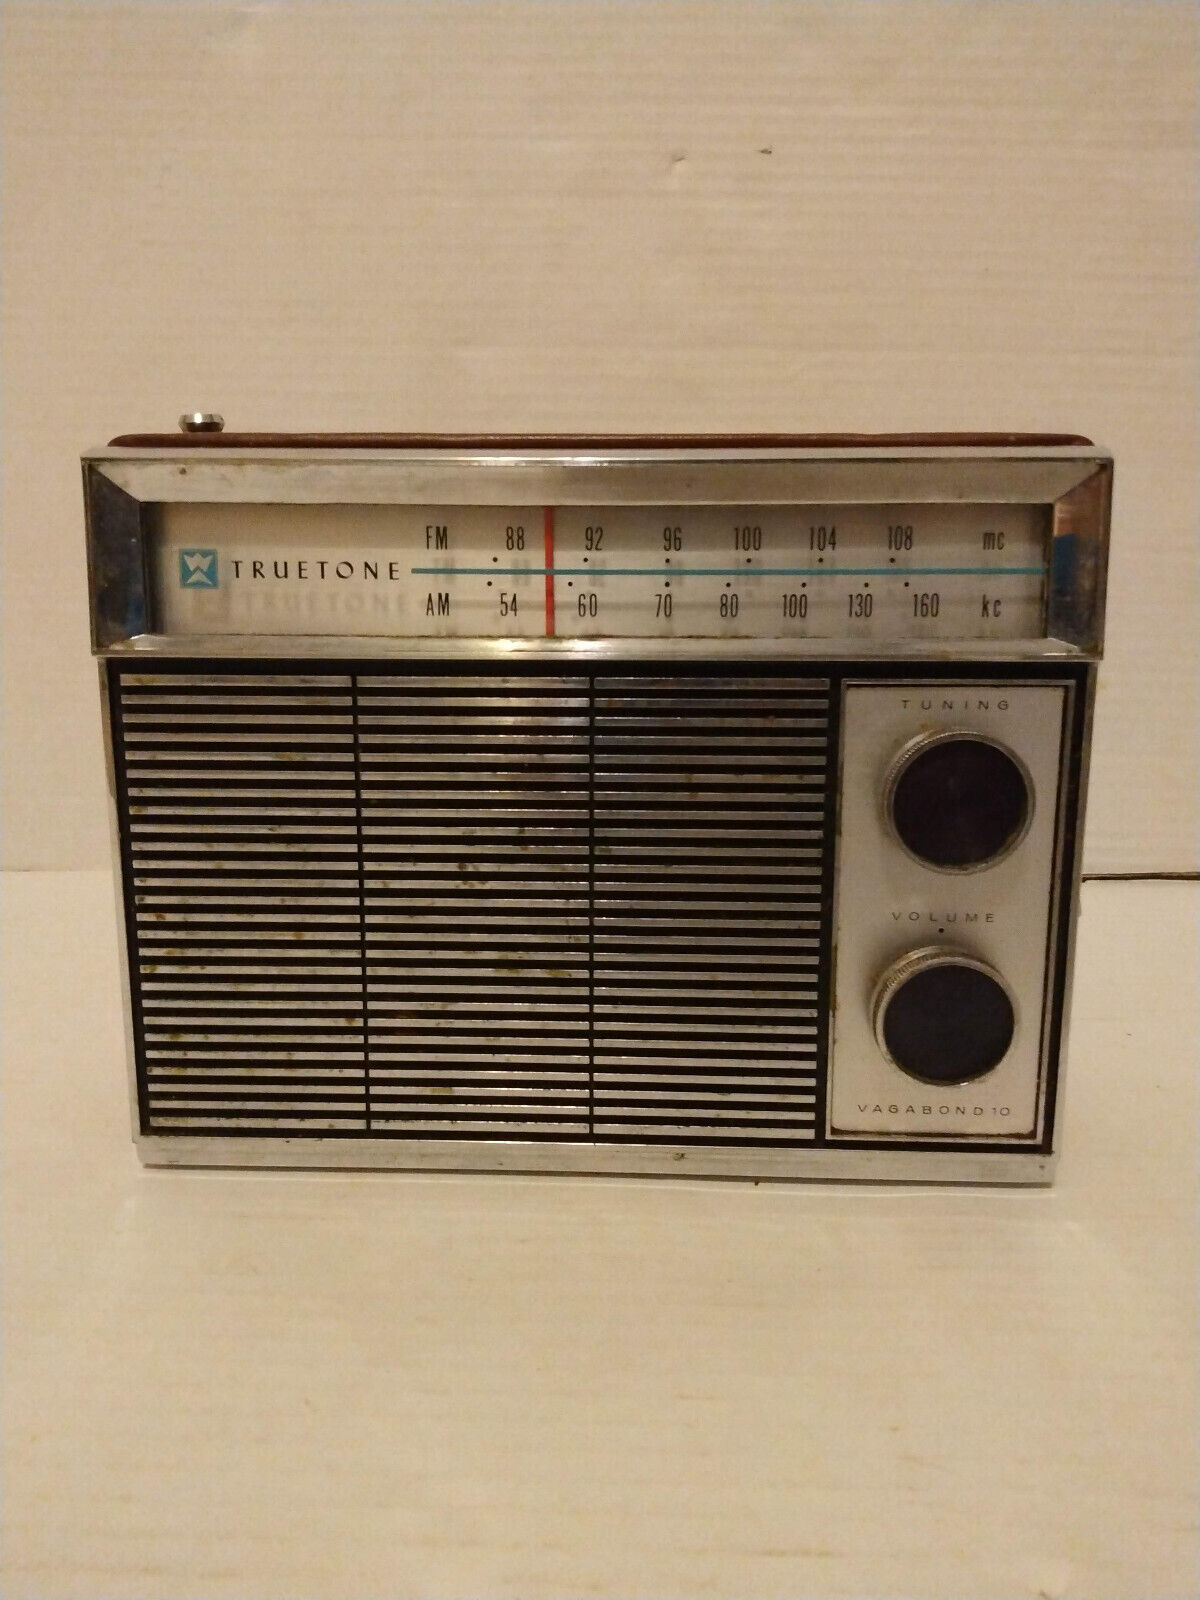 Truetone Vagabond 10 Portable AM-FM Radio Model TAE-3754A-76